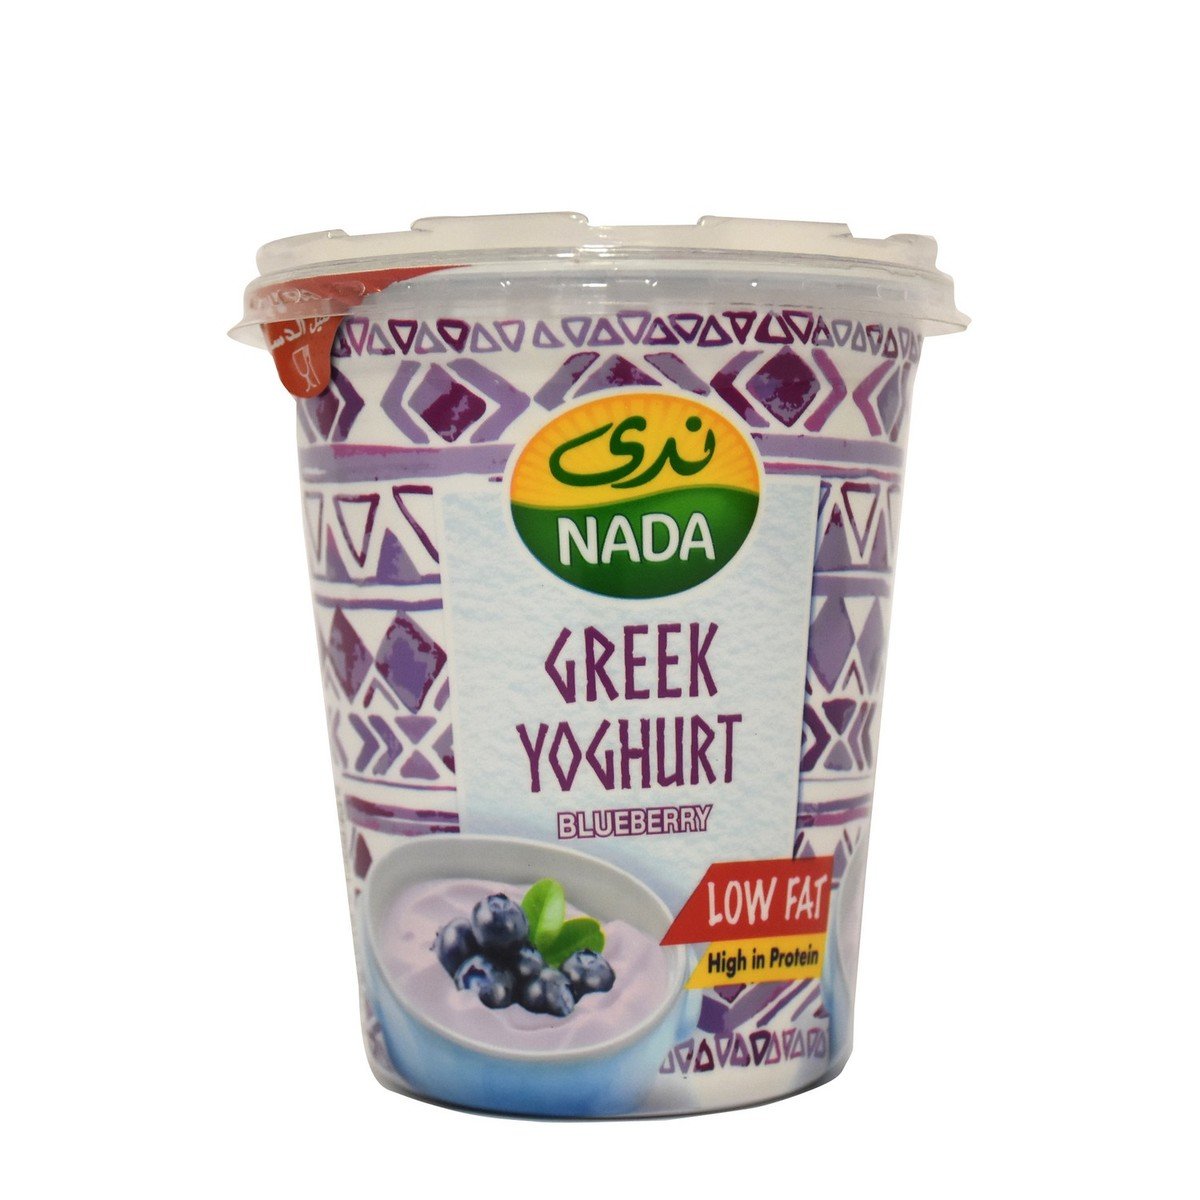 Nada Greek Yoghurt Blueberry Low Fat 360g